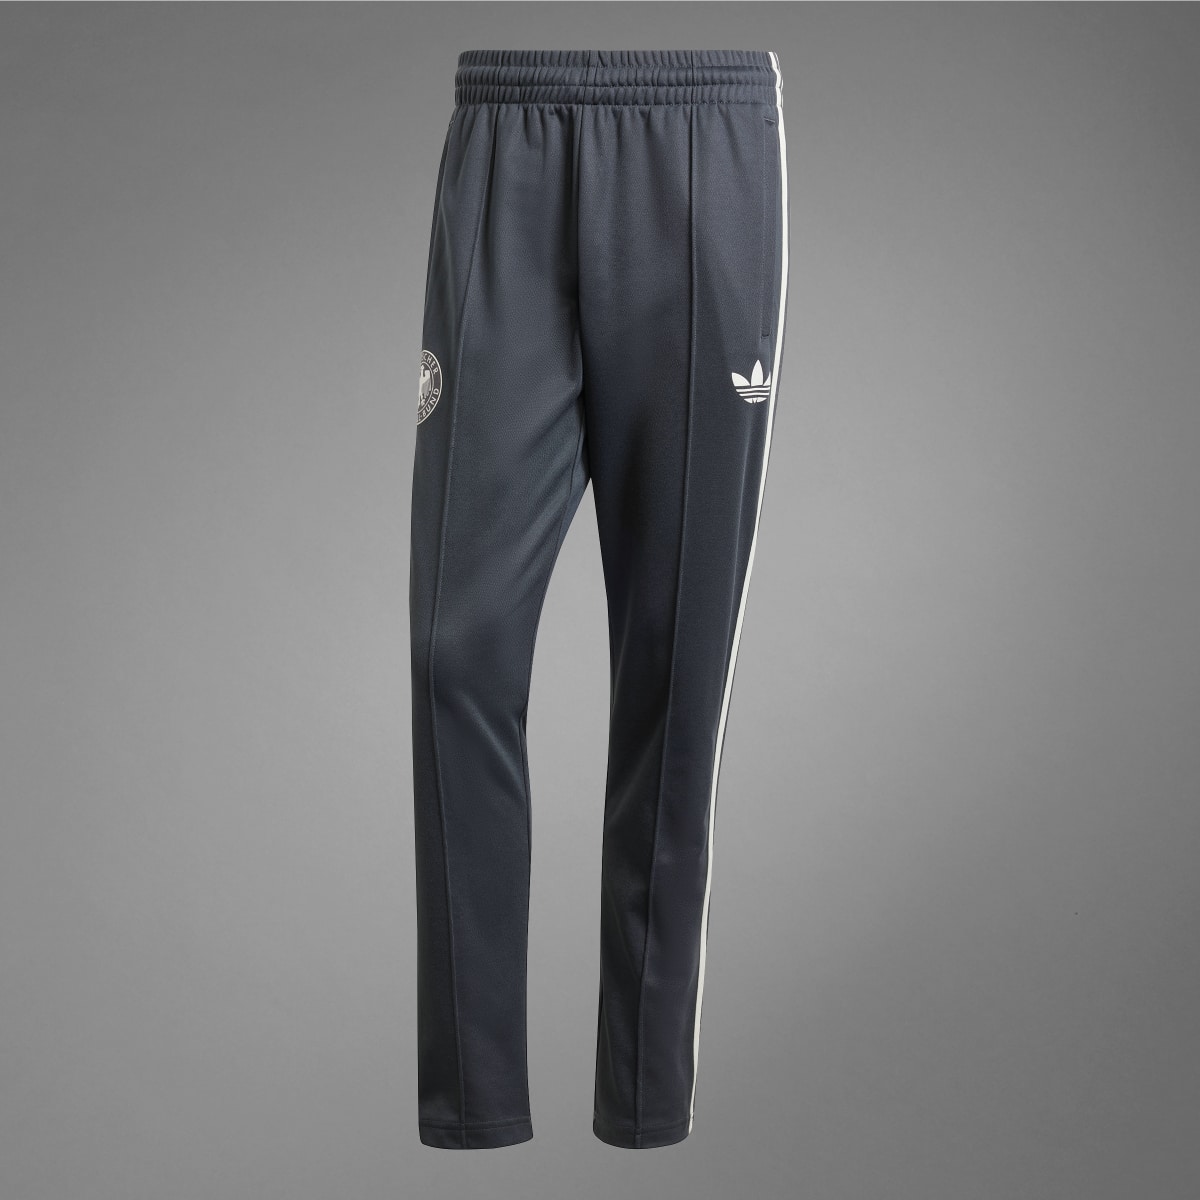 Adidas Germany Beckenbauer Track Pants. 9